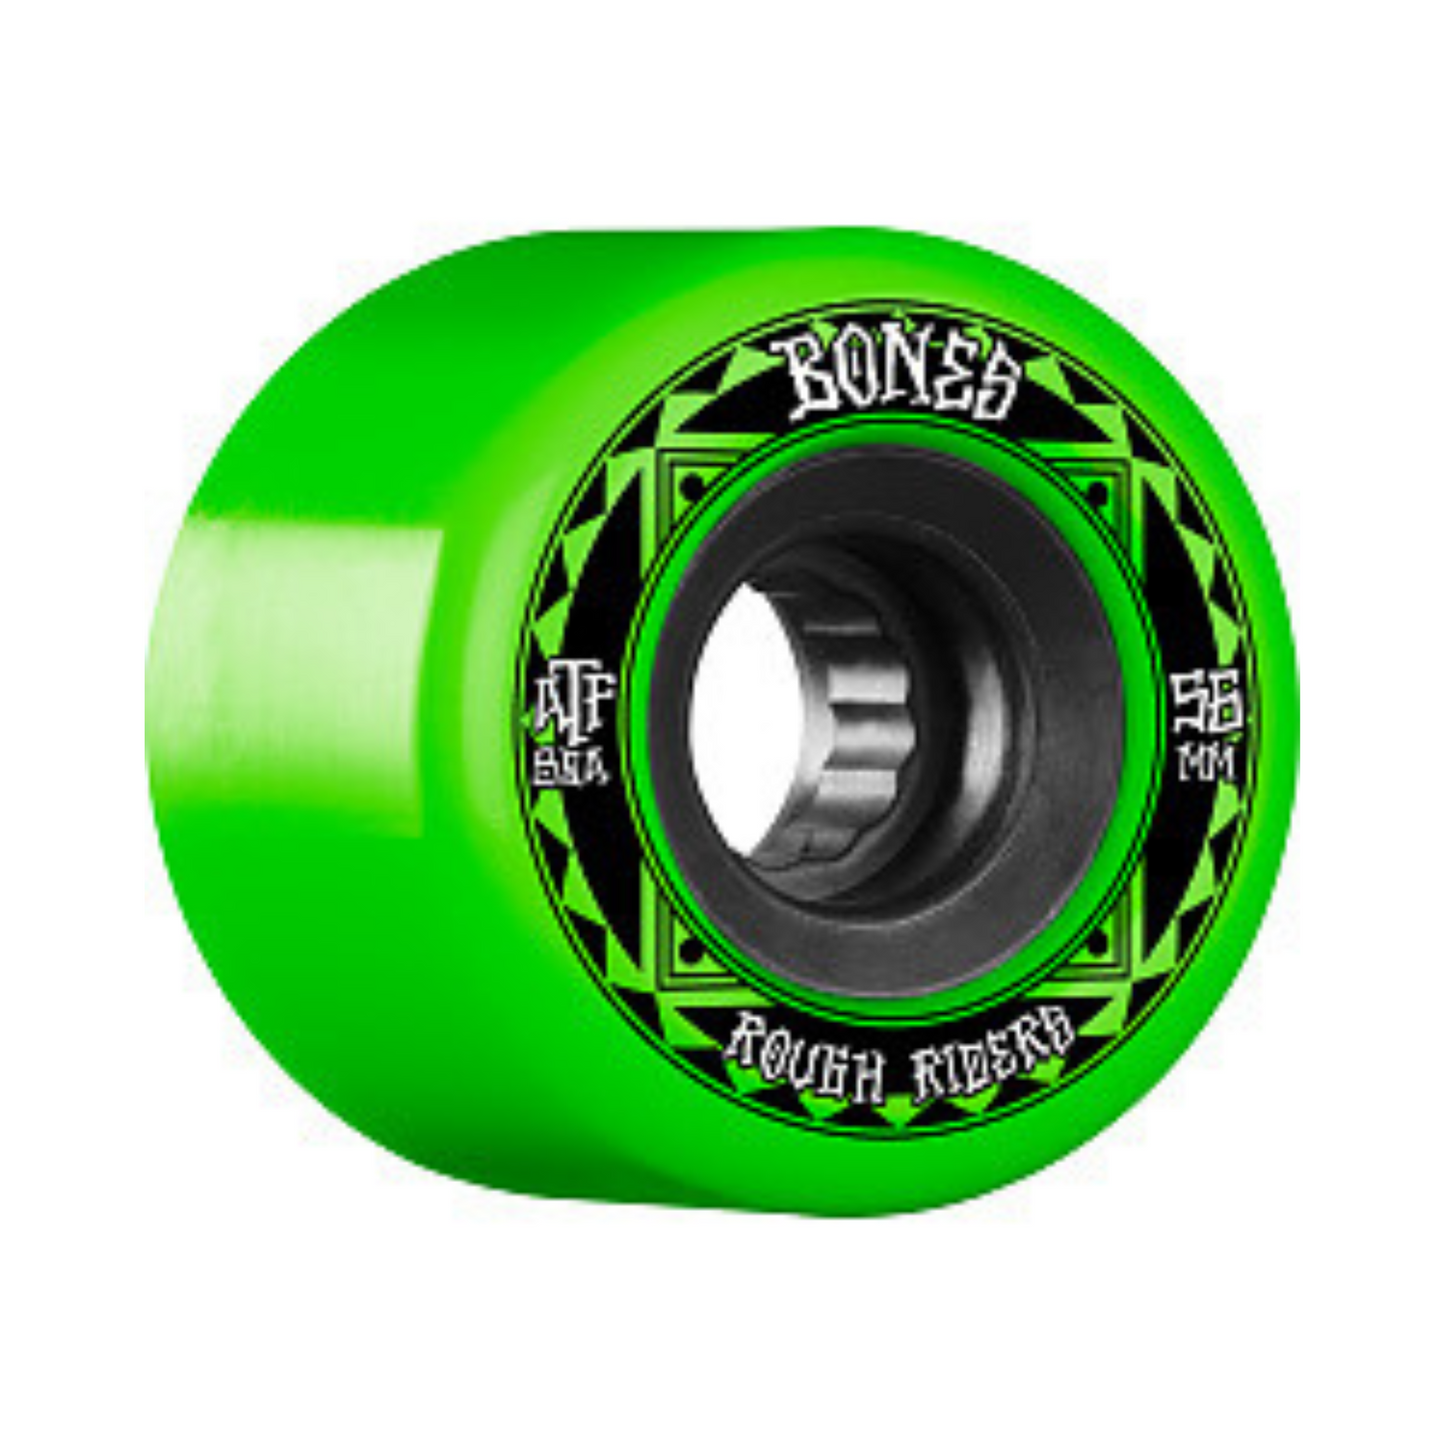 Bones Rough Riders Skateboard Wheels 56mm 80a - Green